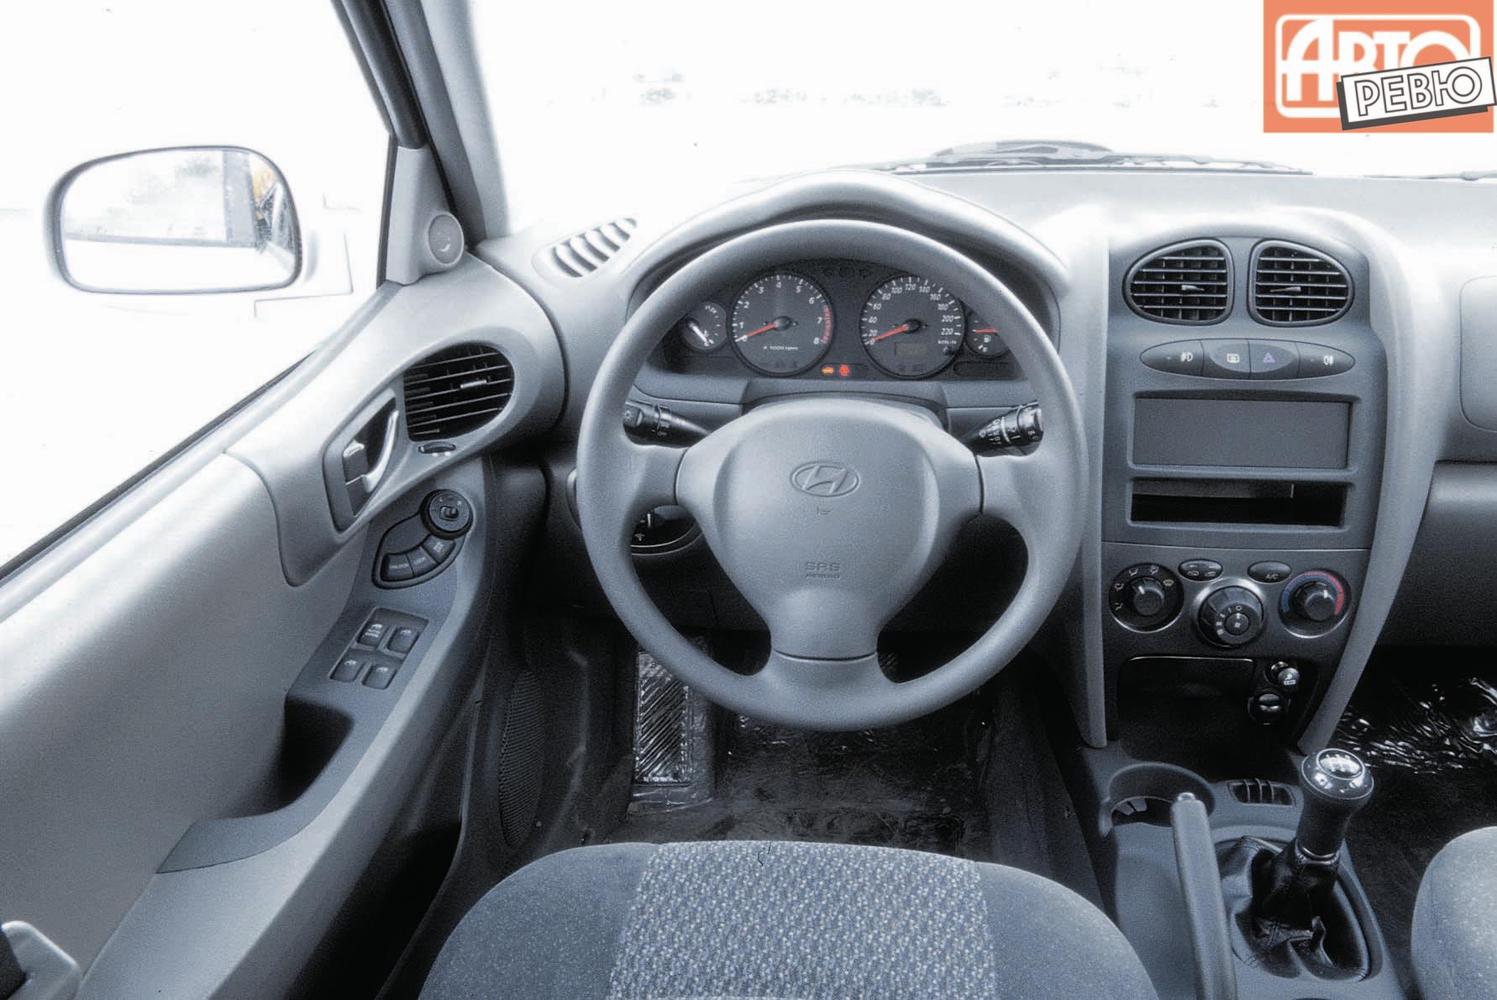 кроссовер Hyundai Santa Fe 2000 - 2012г выпуска модификация 2.0 AT (112 л.с.)